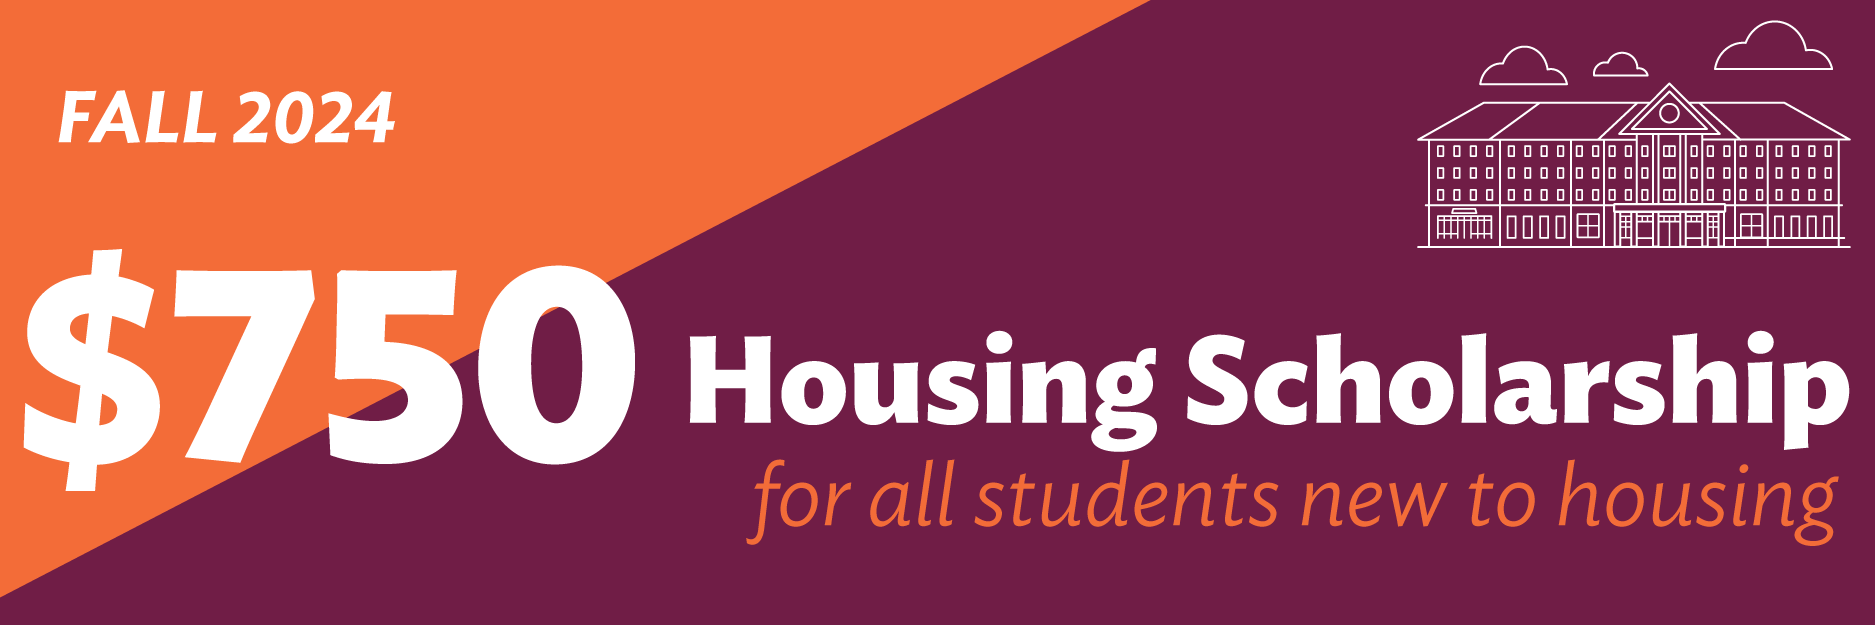 Fall 2024 Campus Housing Scholarship